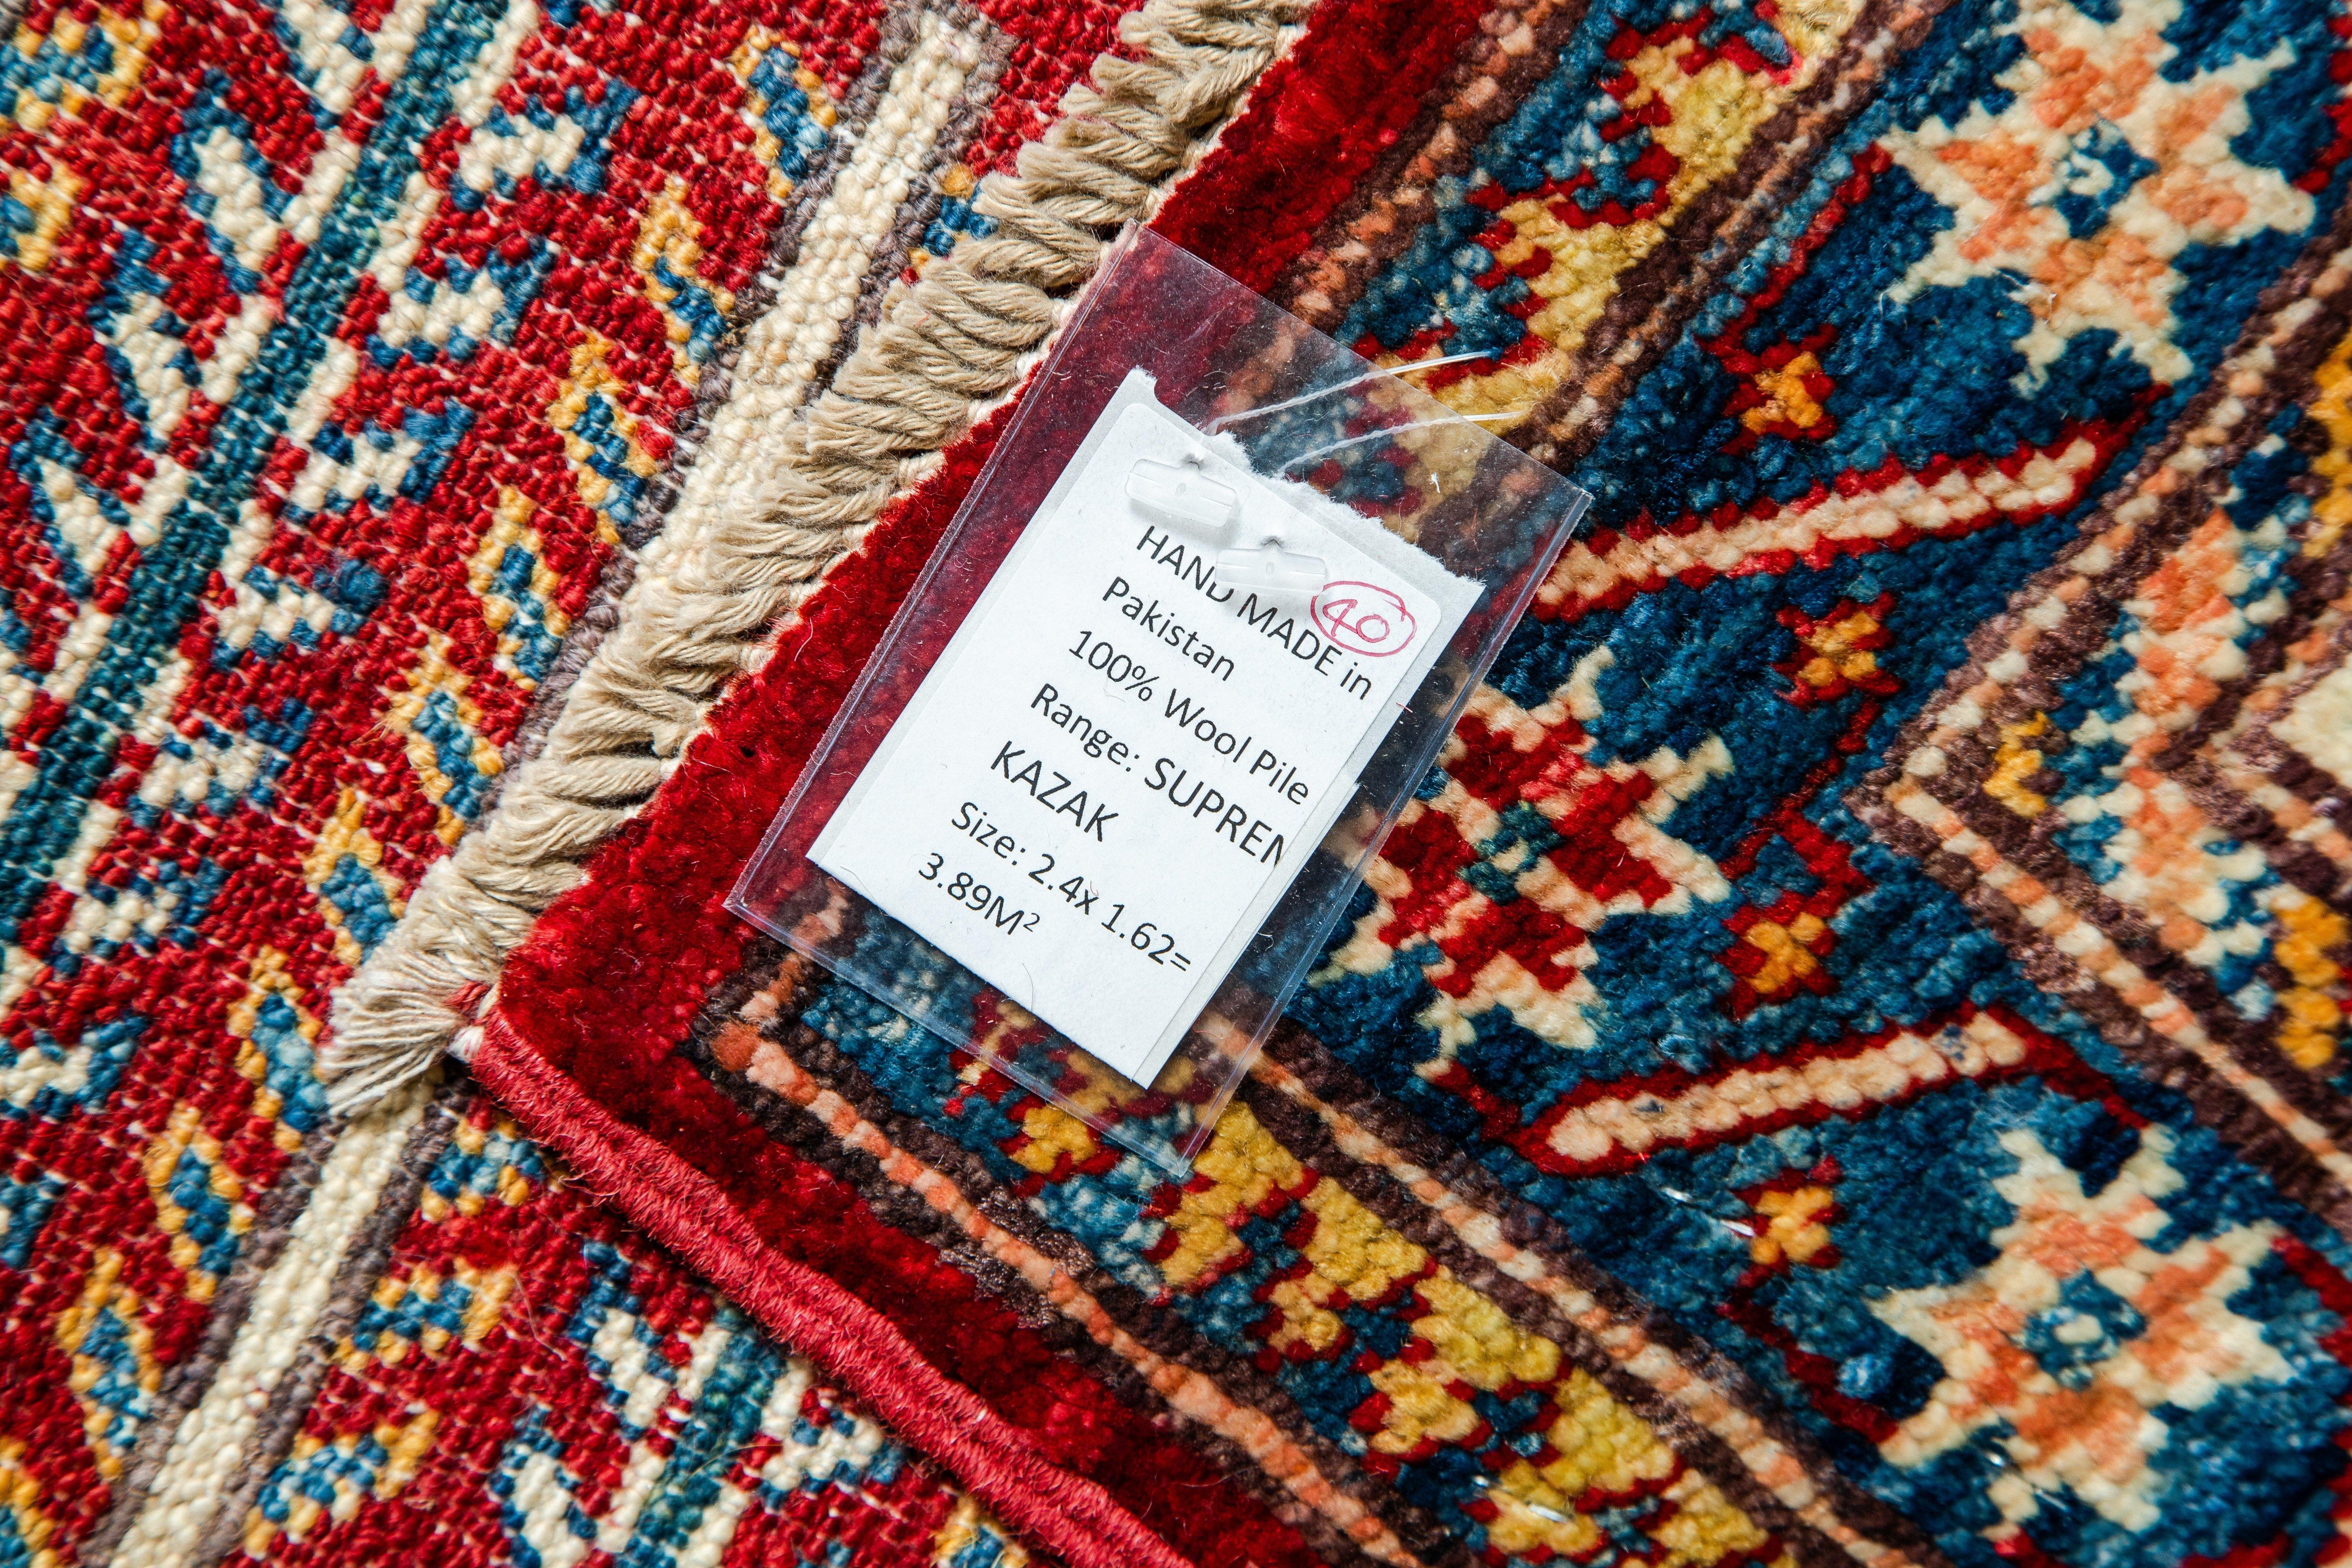 Kazak Supreme 240162 - The Rug Loft rugs ireland